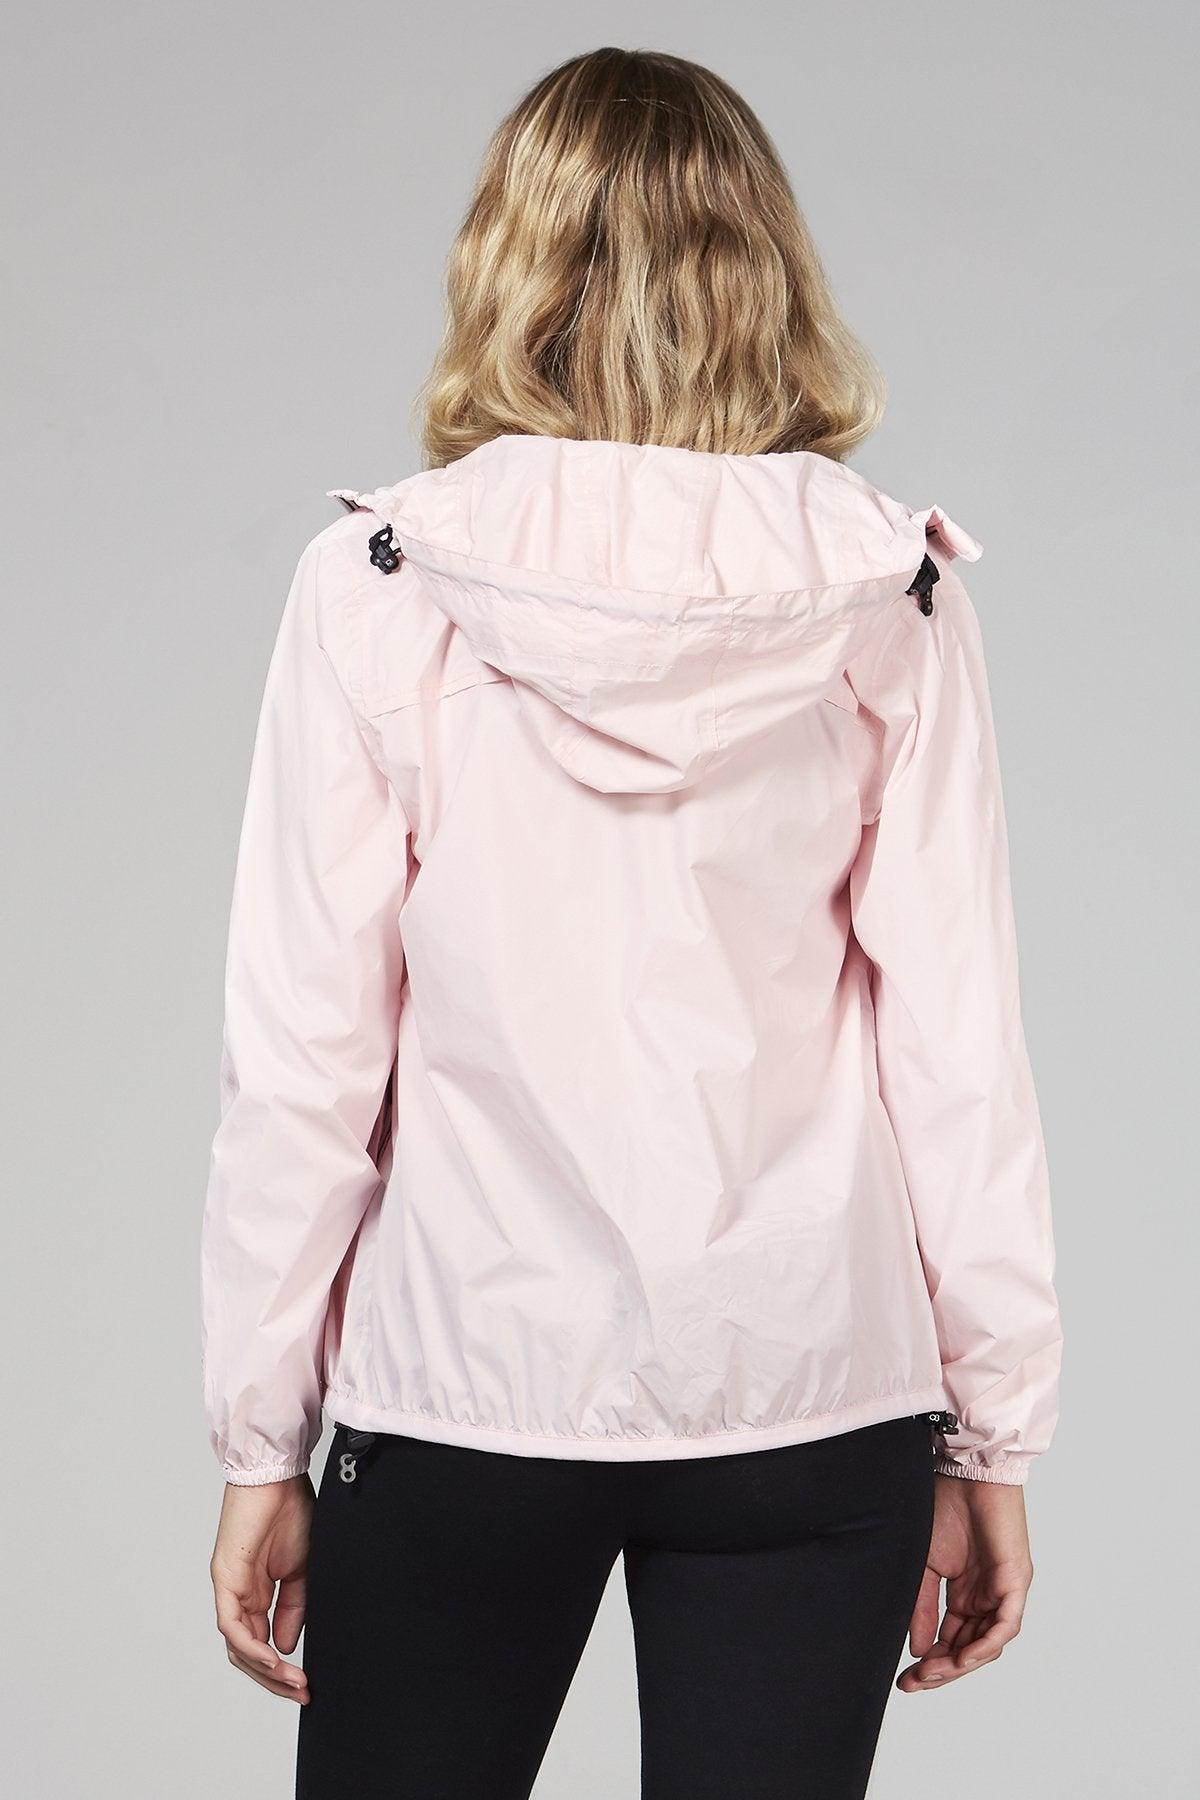 Sloane - Ballet Slipper Full Zip Packable Rain Jacket - VirtuousWares:Global